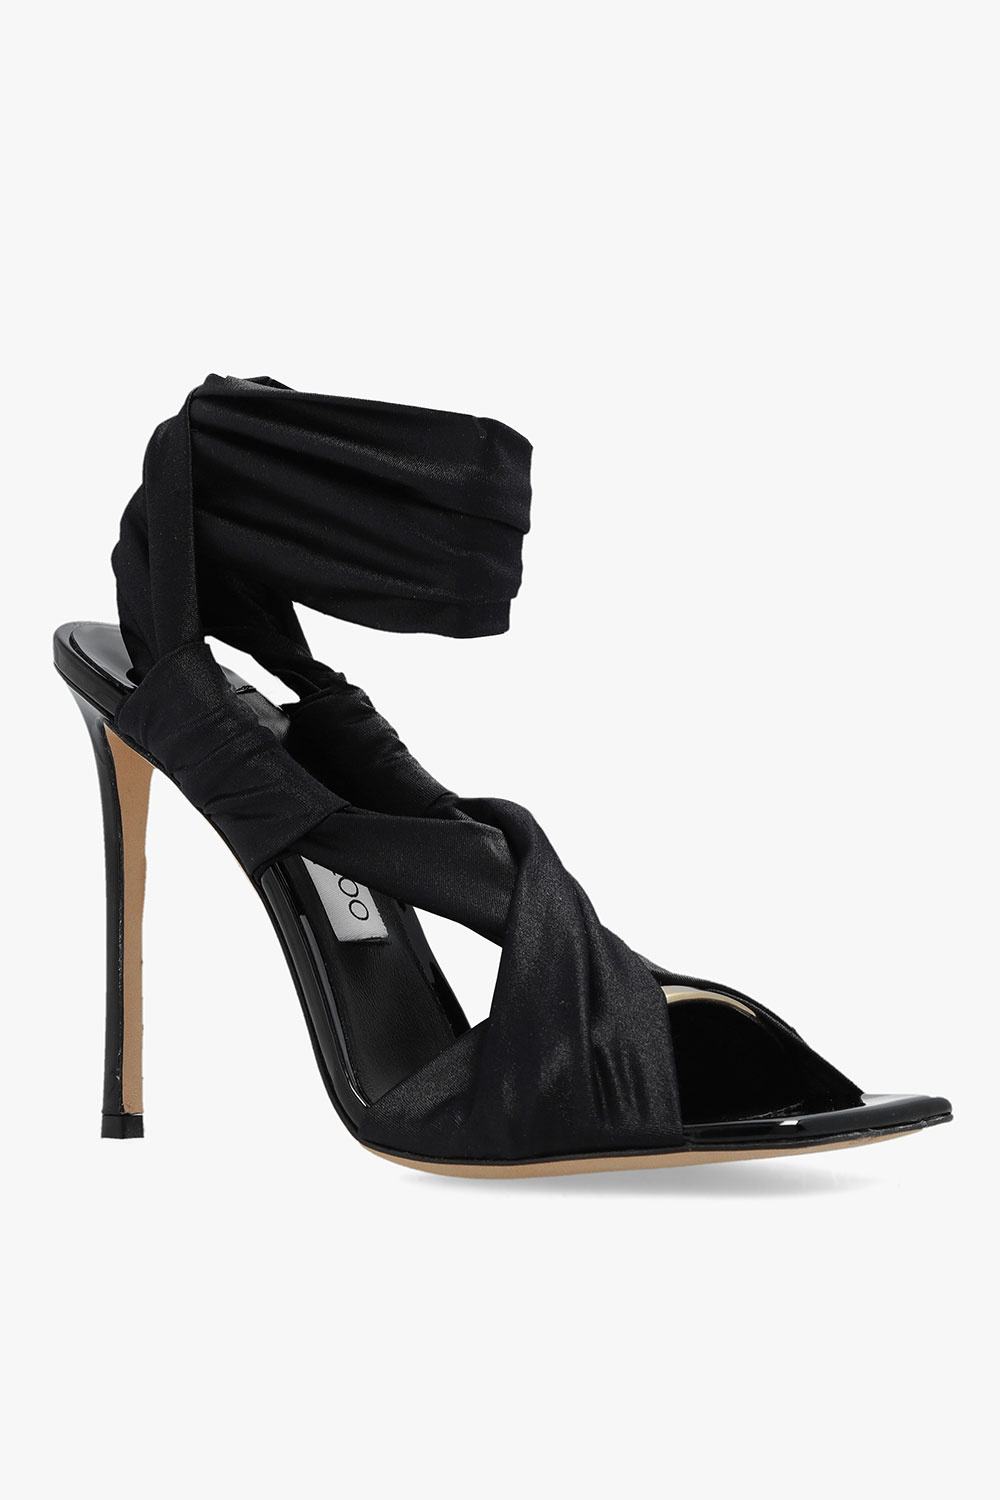 Jimmy Choo ‘Neoma’ heeled sandals